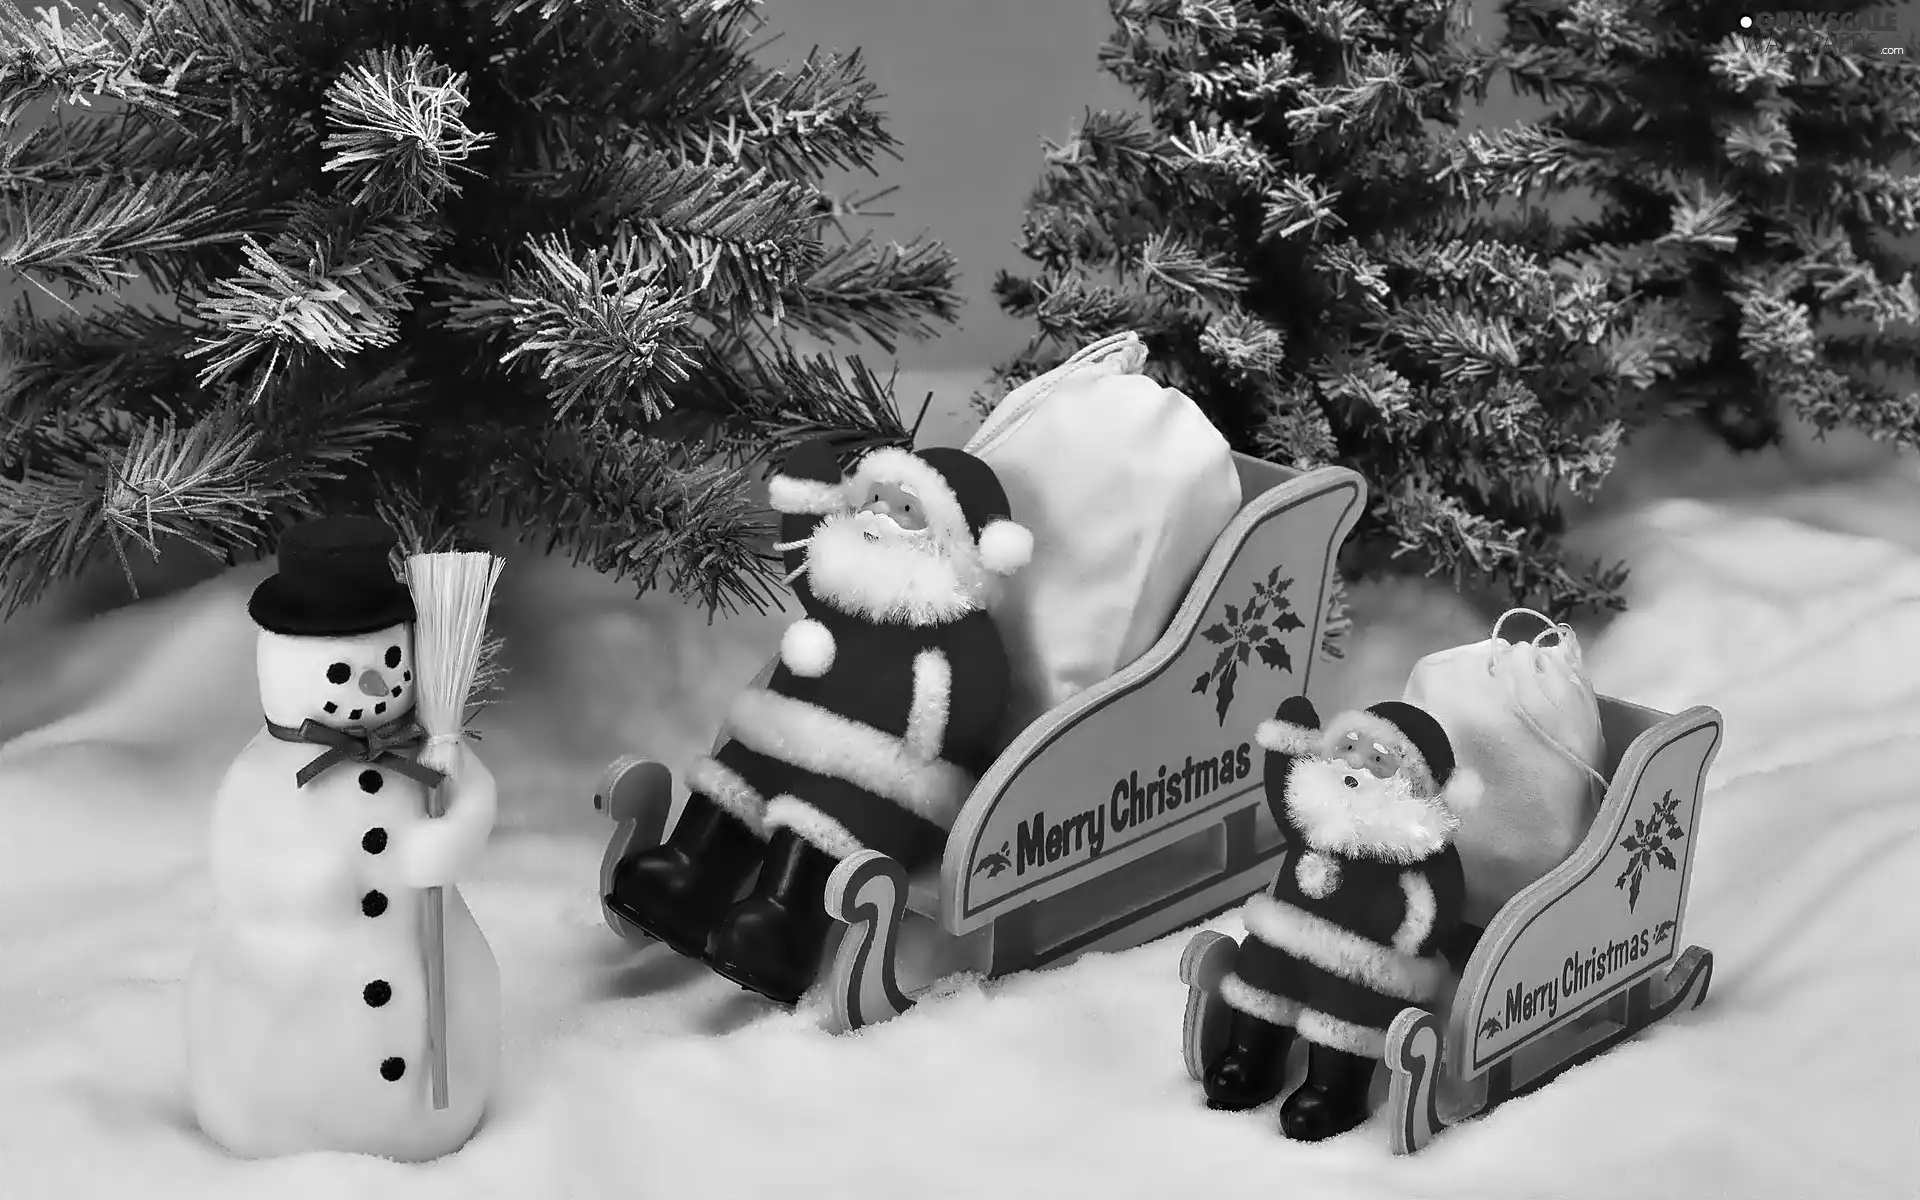 Snowman, Christmas, sleigh, snow, Santas, decor